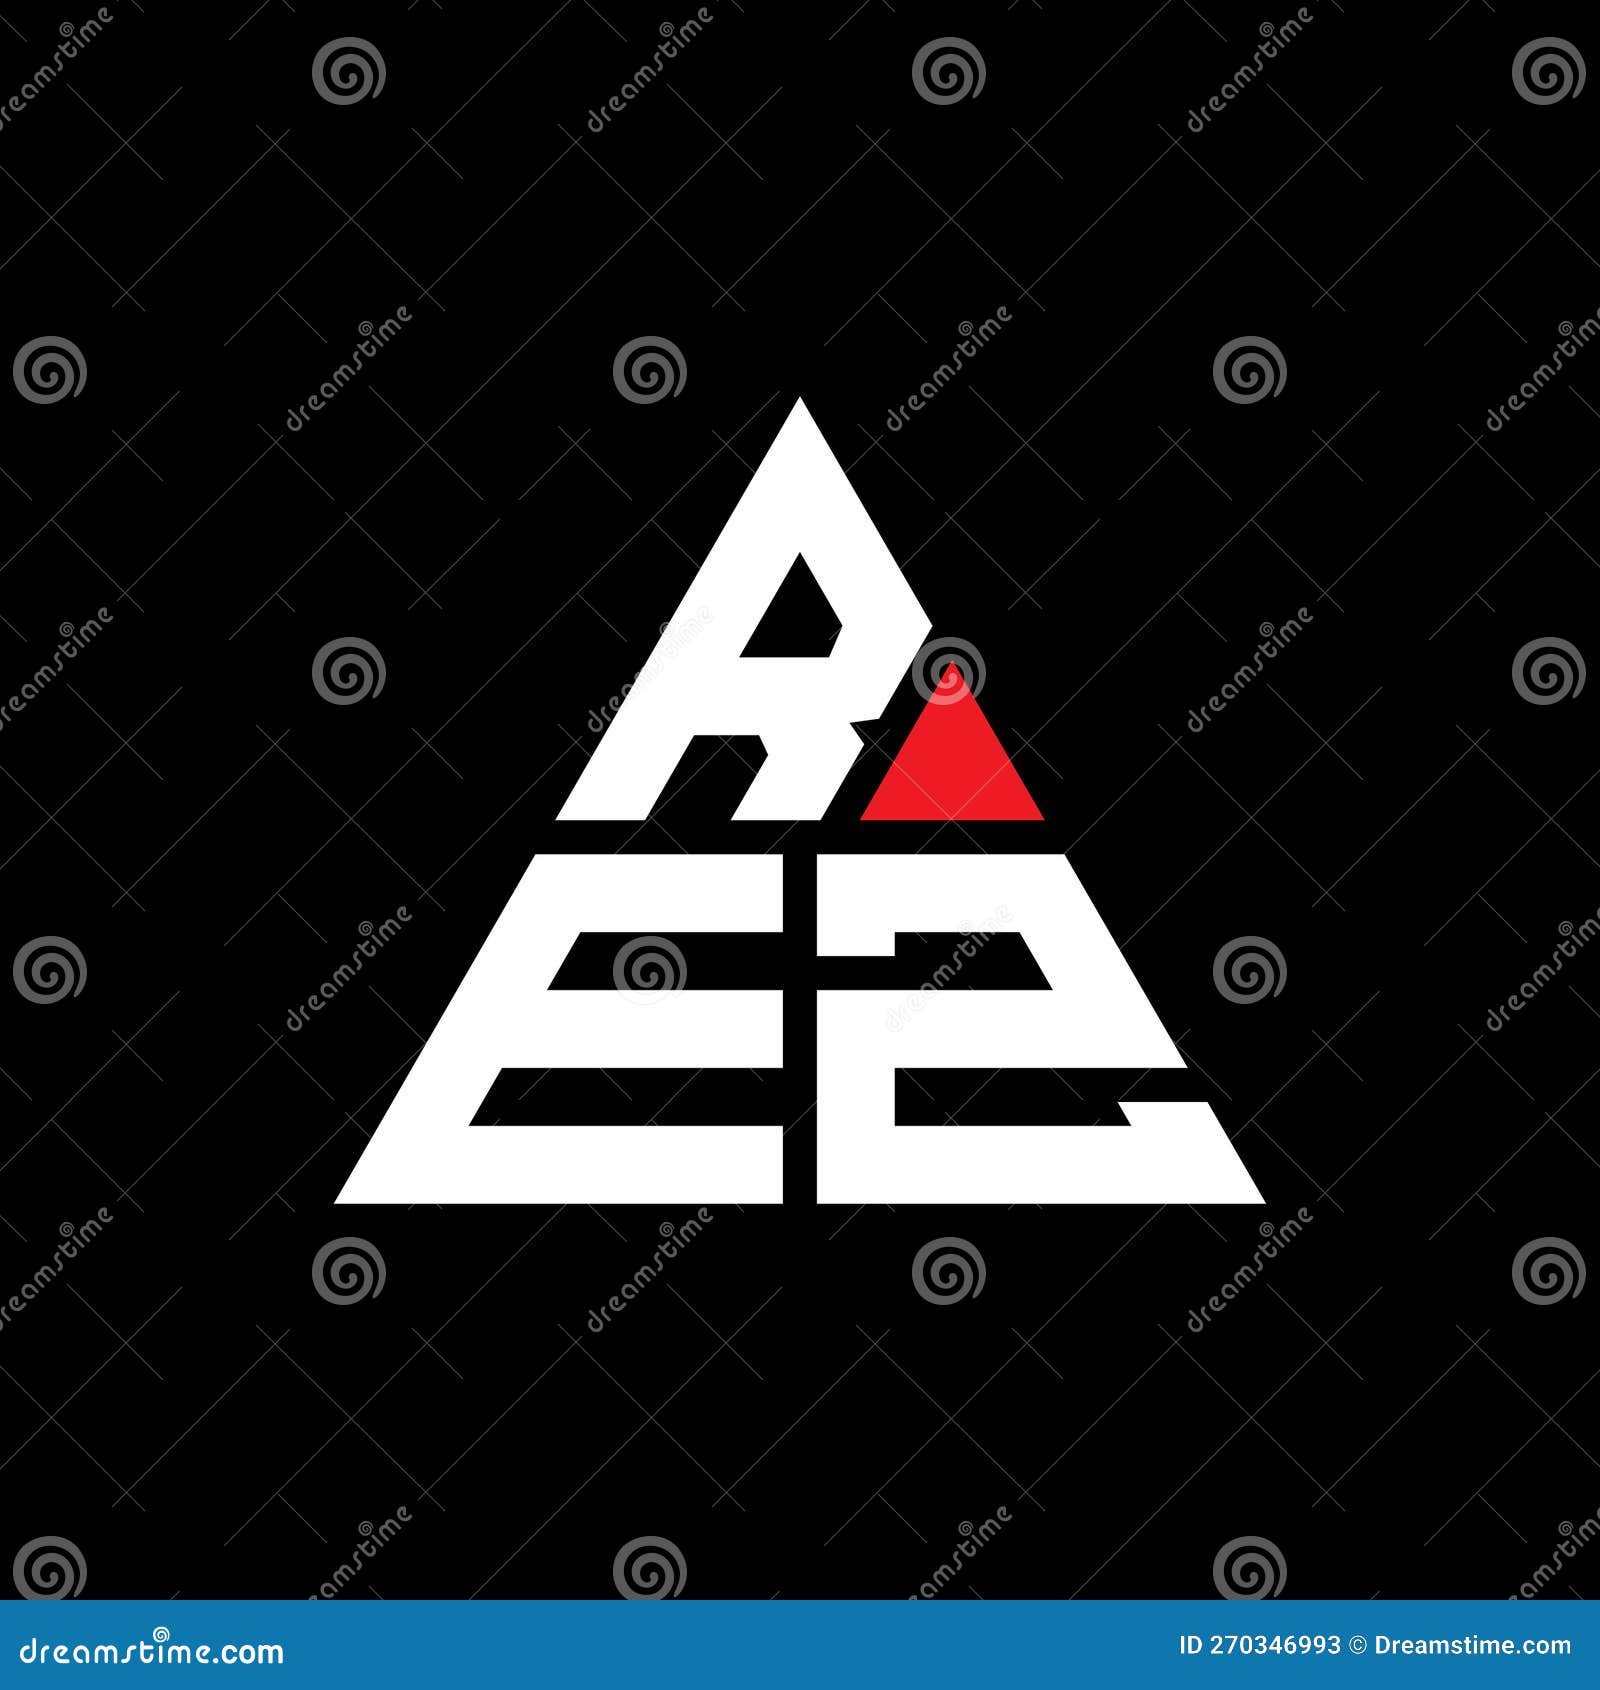 rez triangle letter logo  with triangle . rez triangle logo  monogram. rez triangle  logo template with red